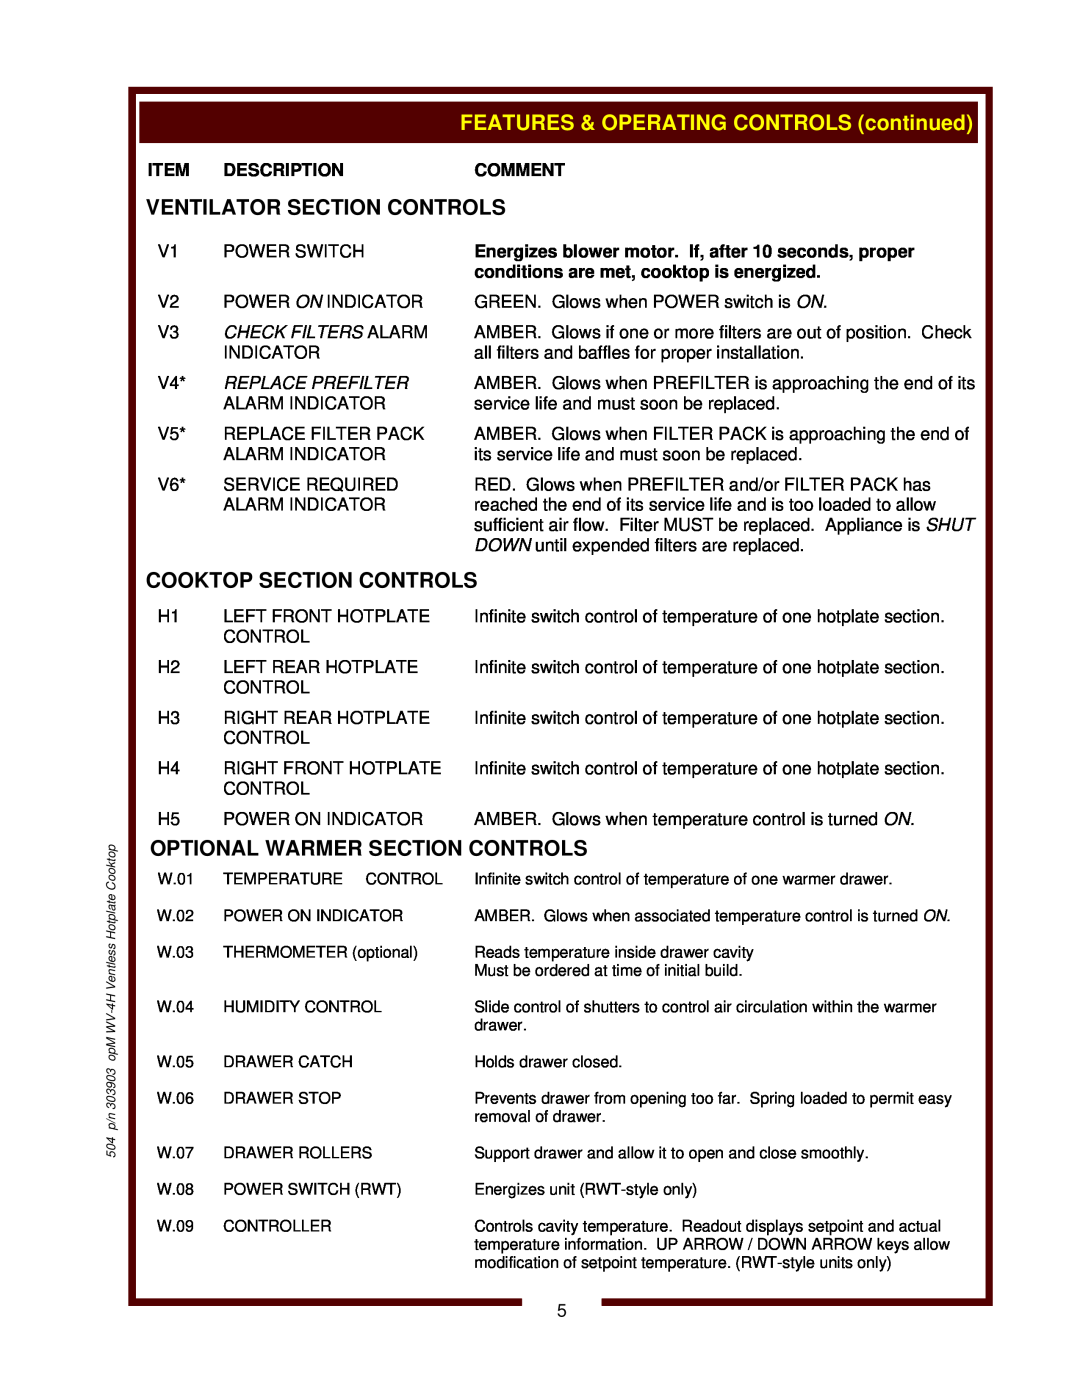 Wells WV-4HF Ventilator Section Controls, Cooktop Section Controls, Optional Warmer Section Controls, Description, Comment 